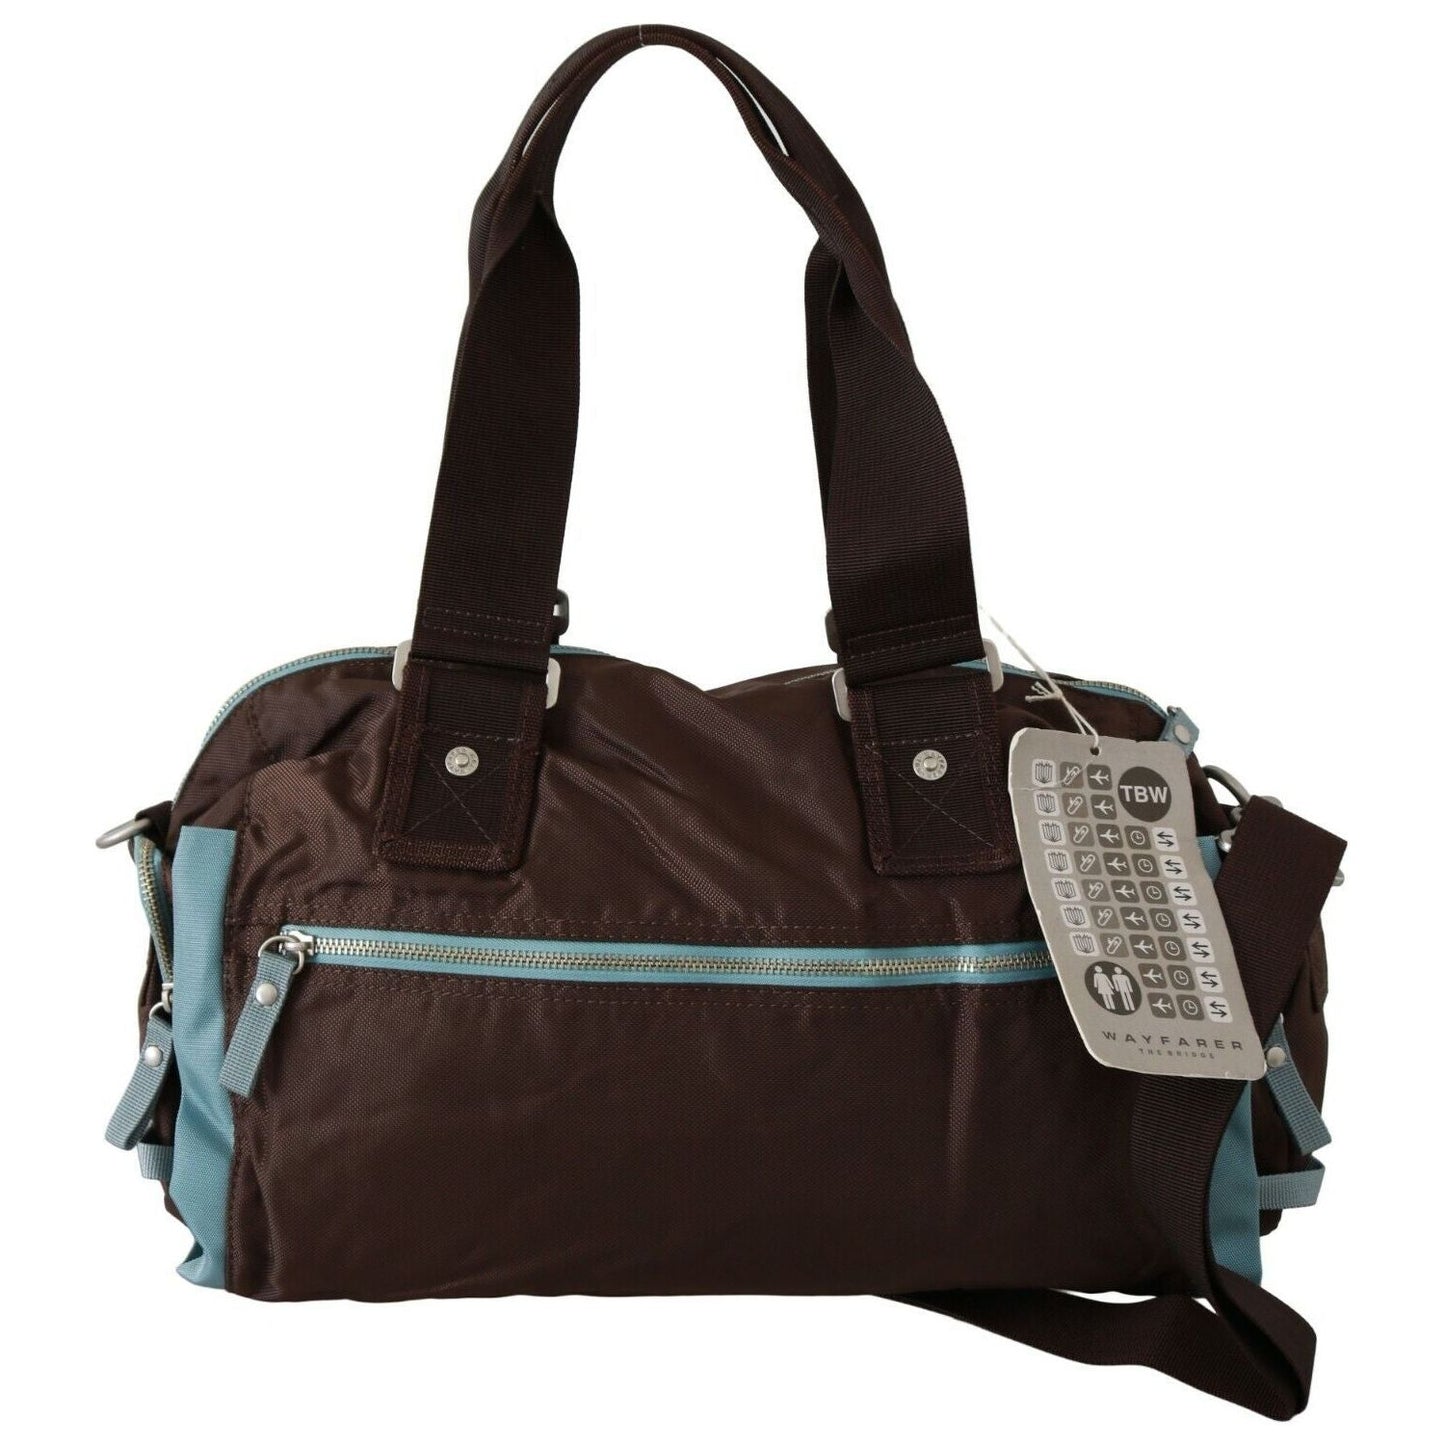 WAYFARER Elegant Duffel Travel Bag in Earthy Brown brown-handbag-duffel-travel-purse Luggage s-l1600-17-1-acb85ea7-be5.jpg